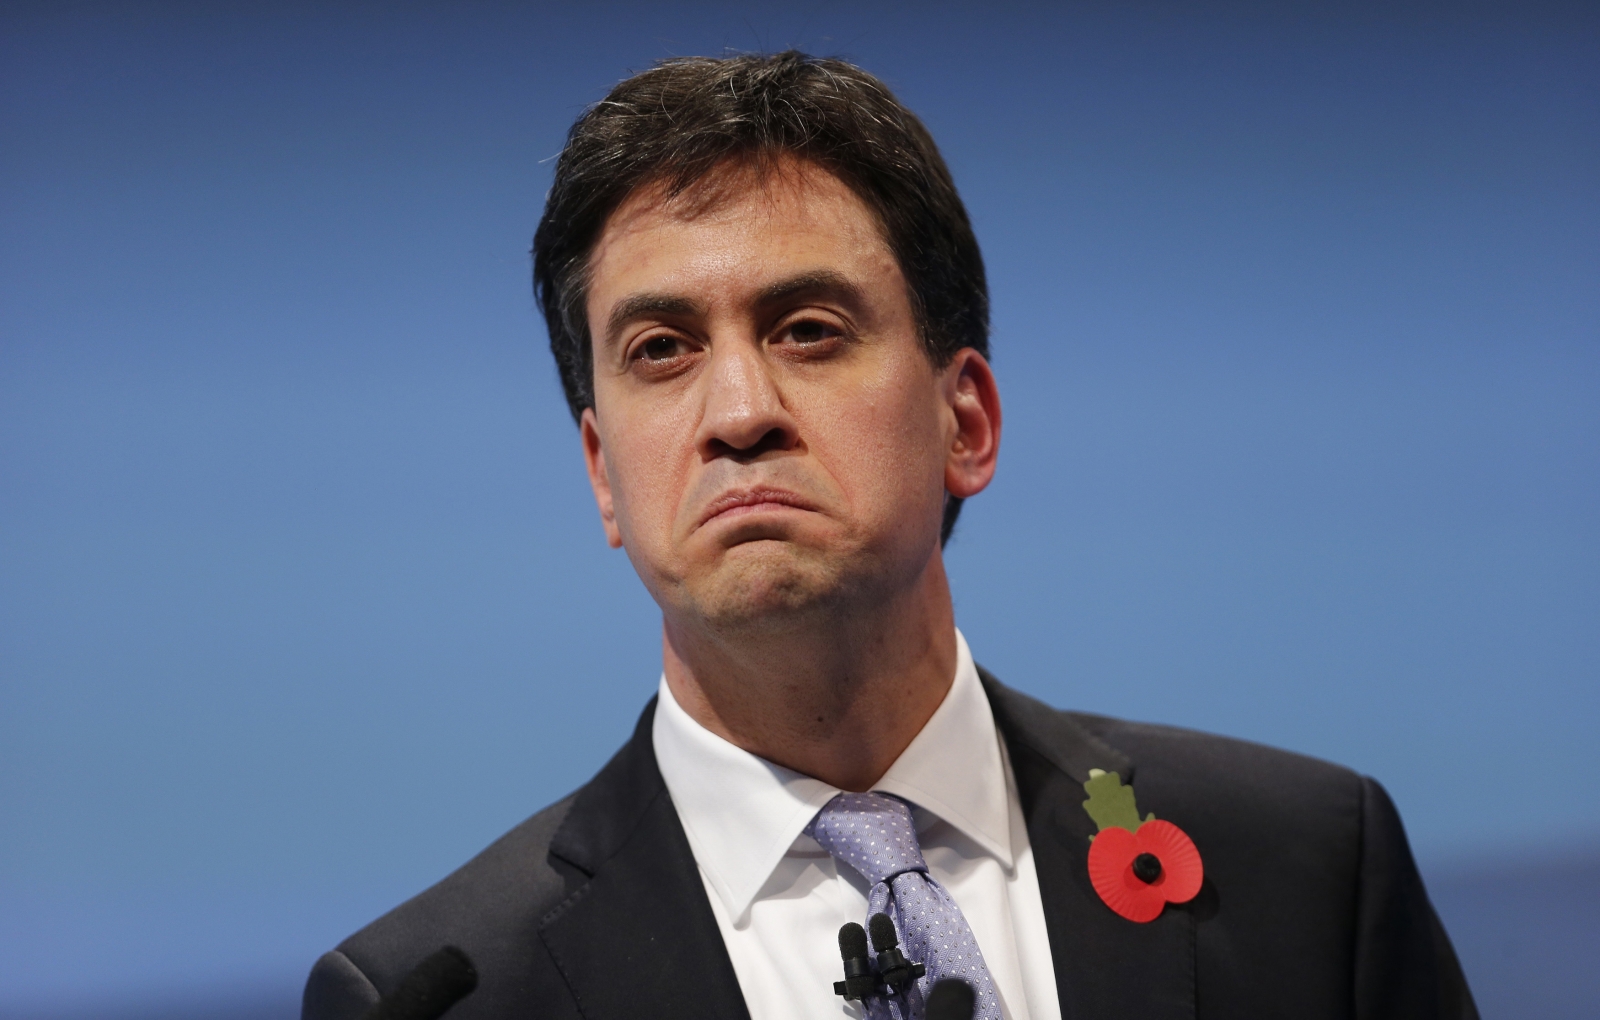 Ed Miliband to make passionate plea to keep the UK intact 